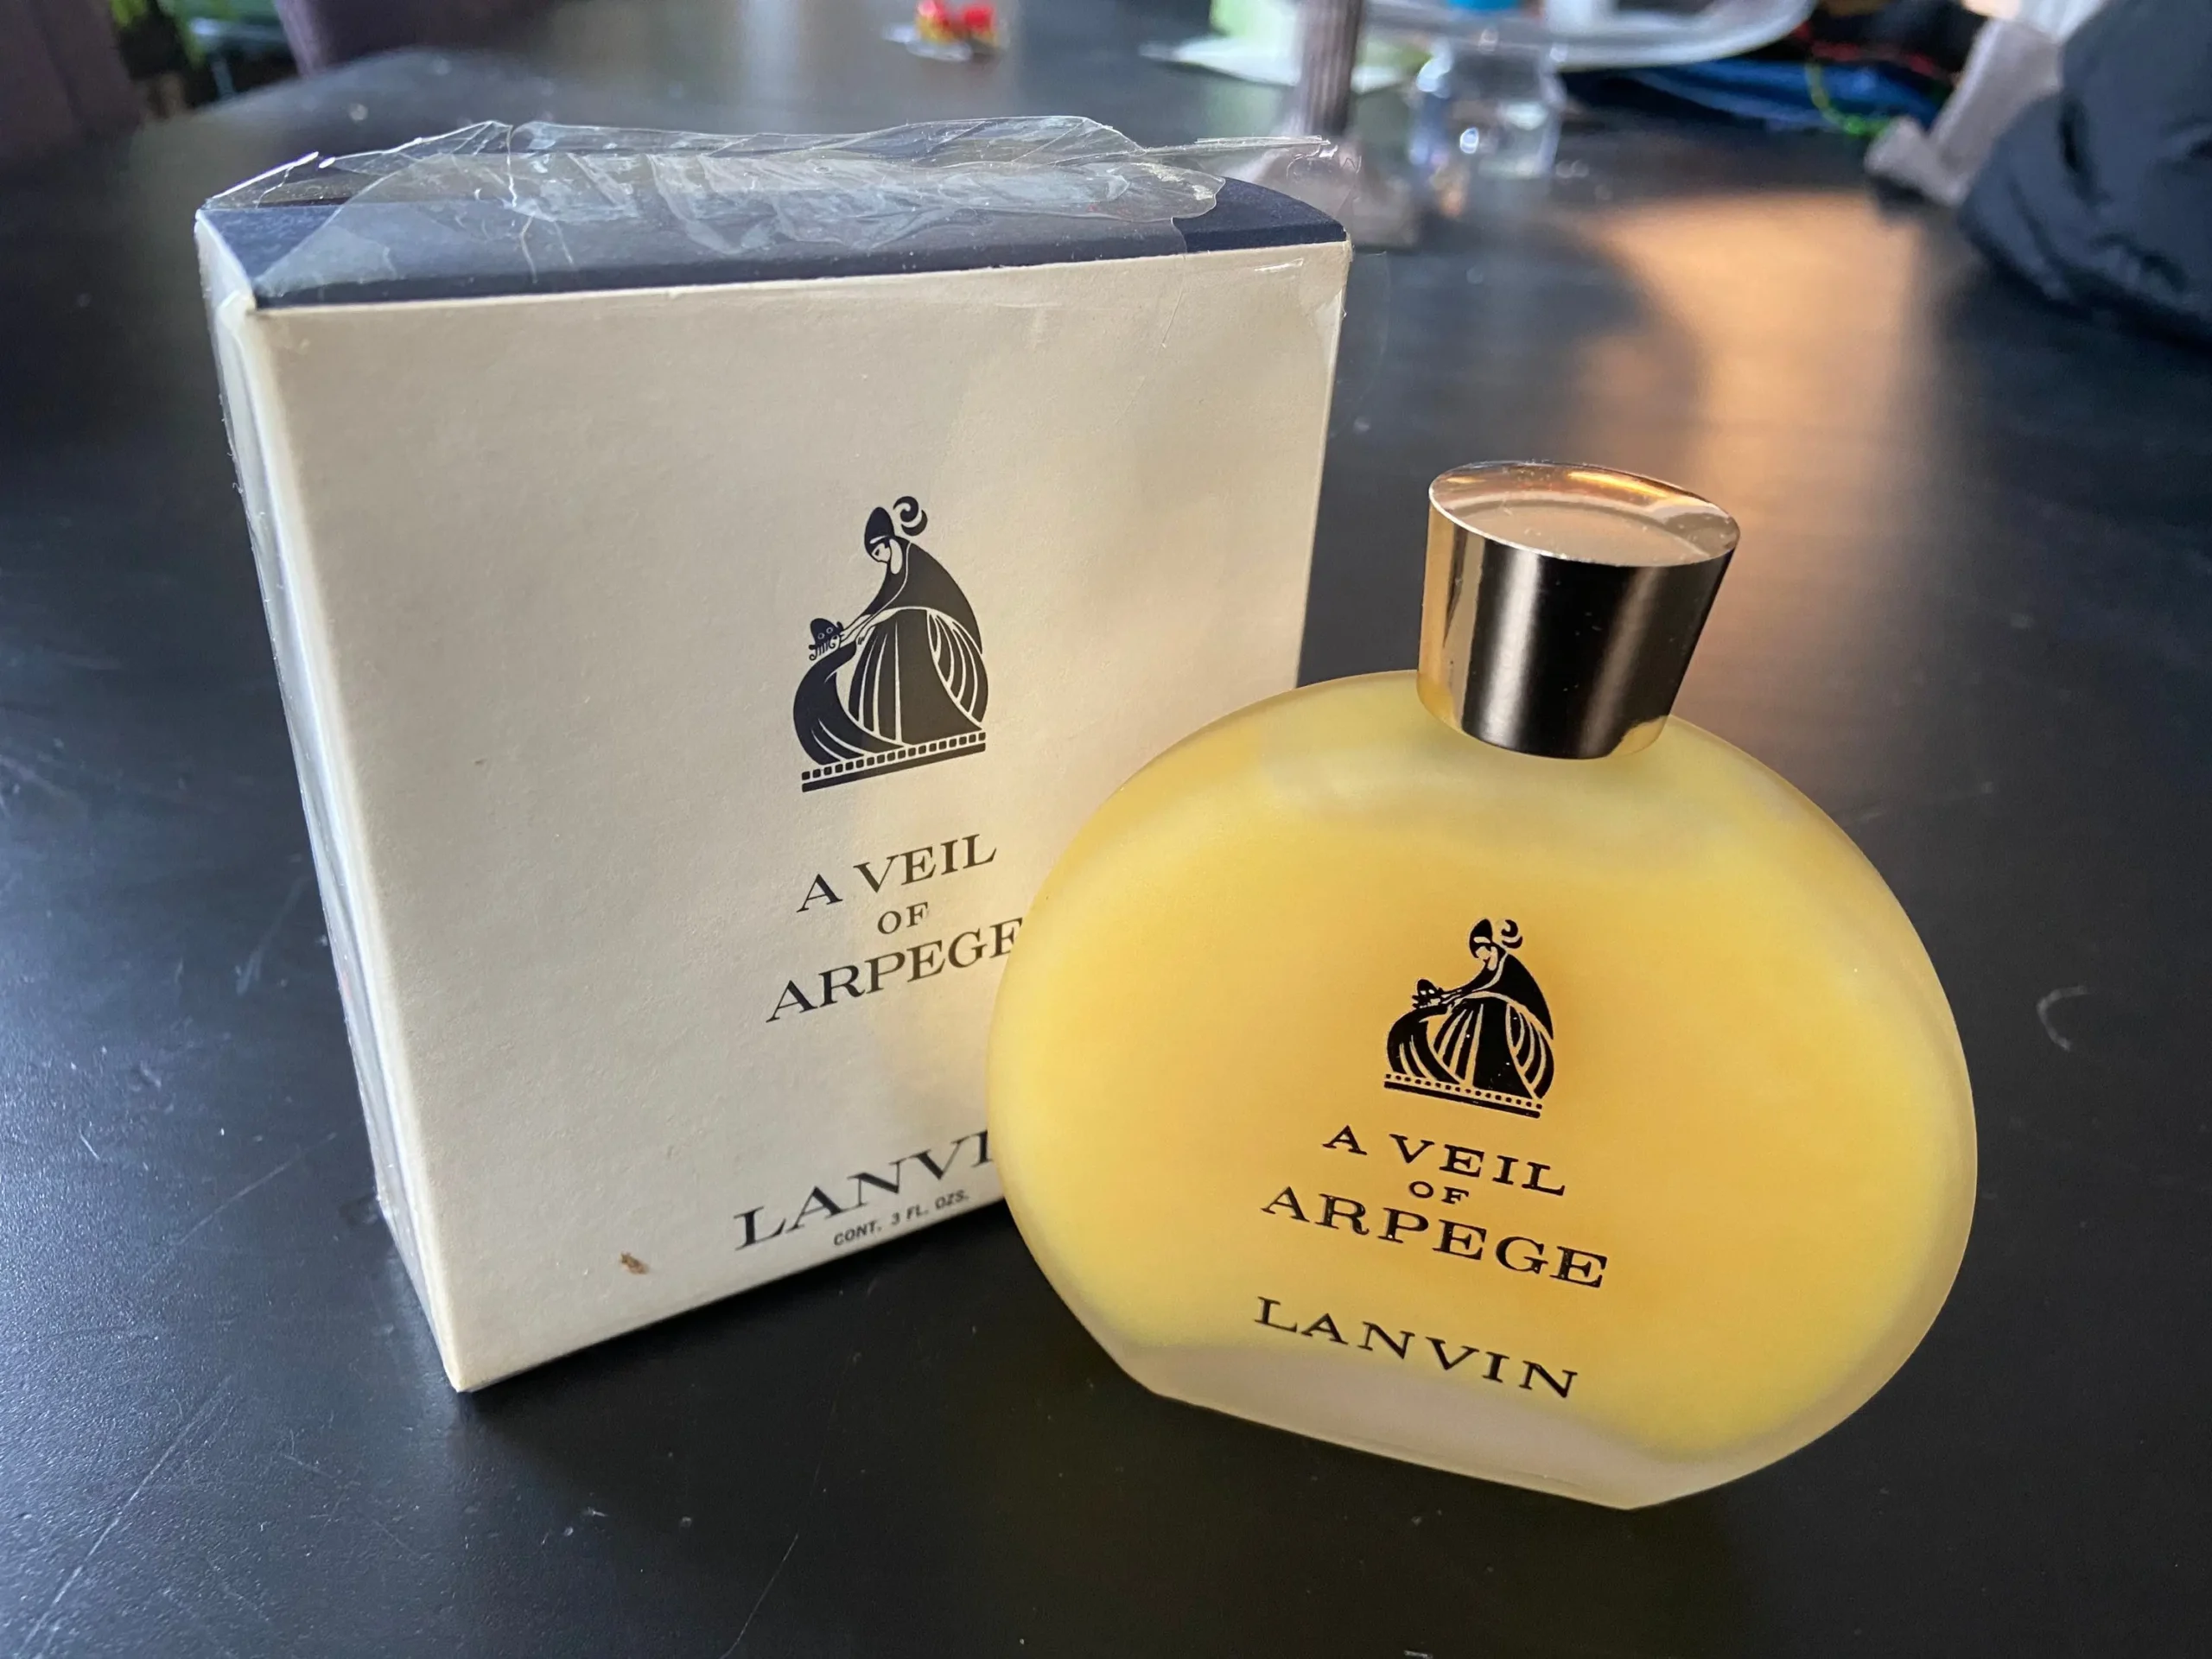 arpegio perfume - Qué aroma tiene el arpege